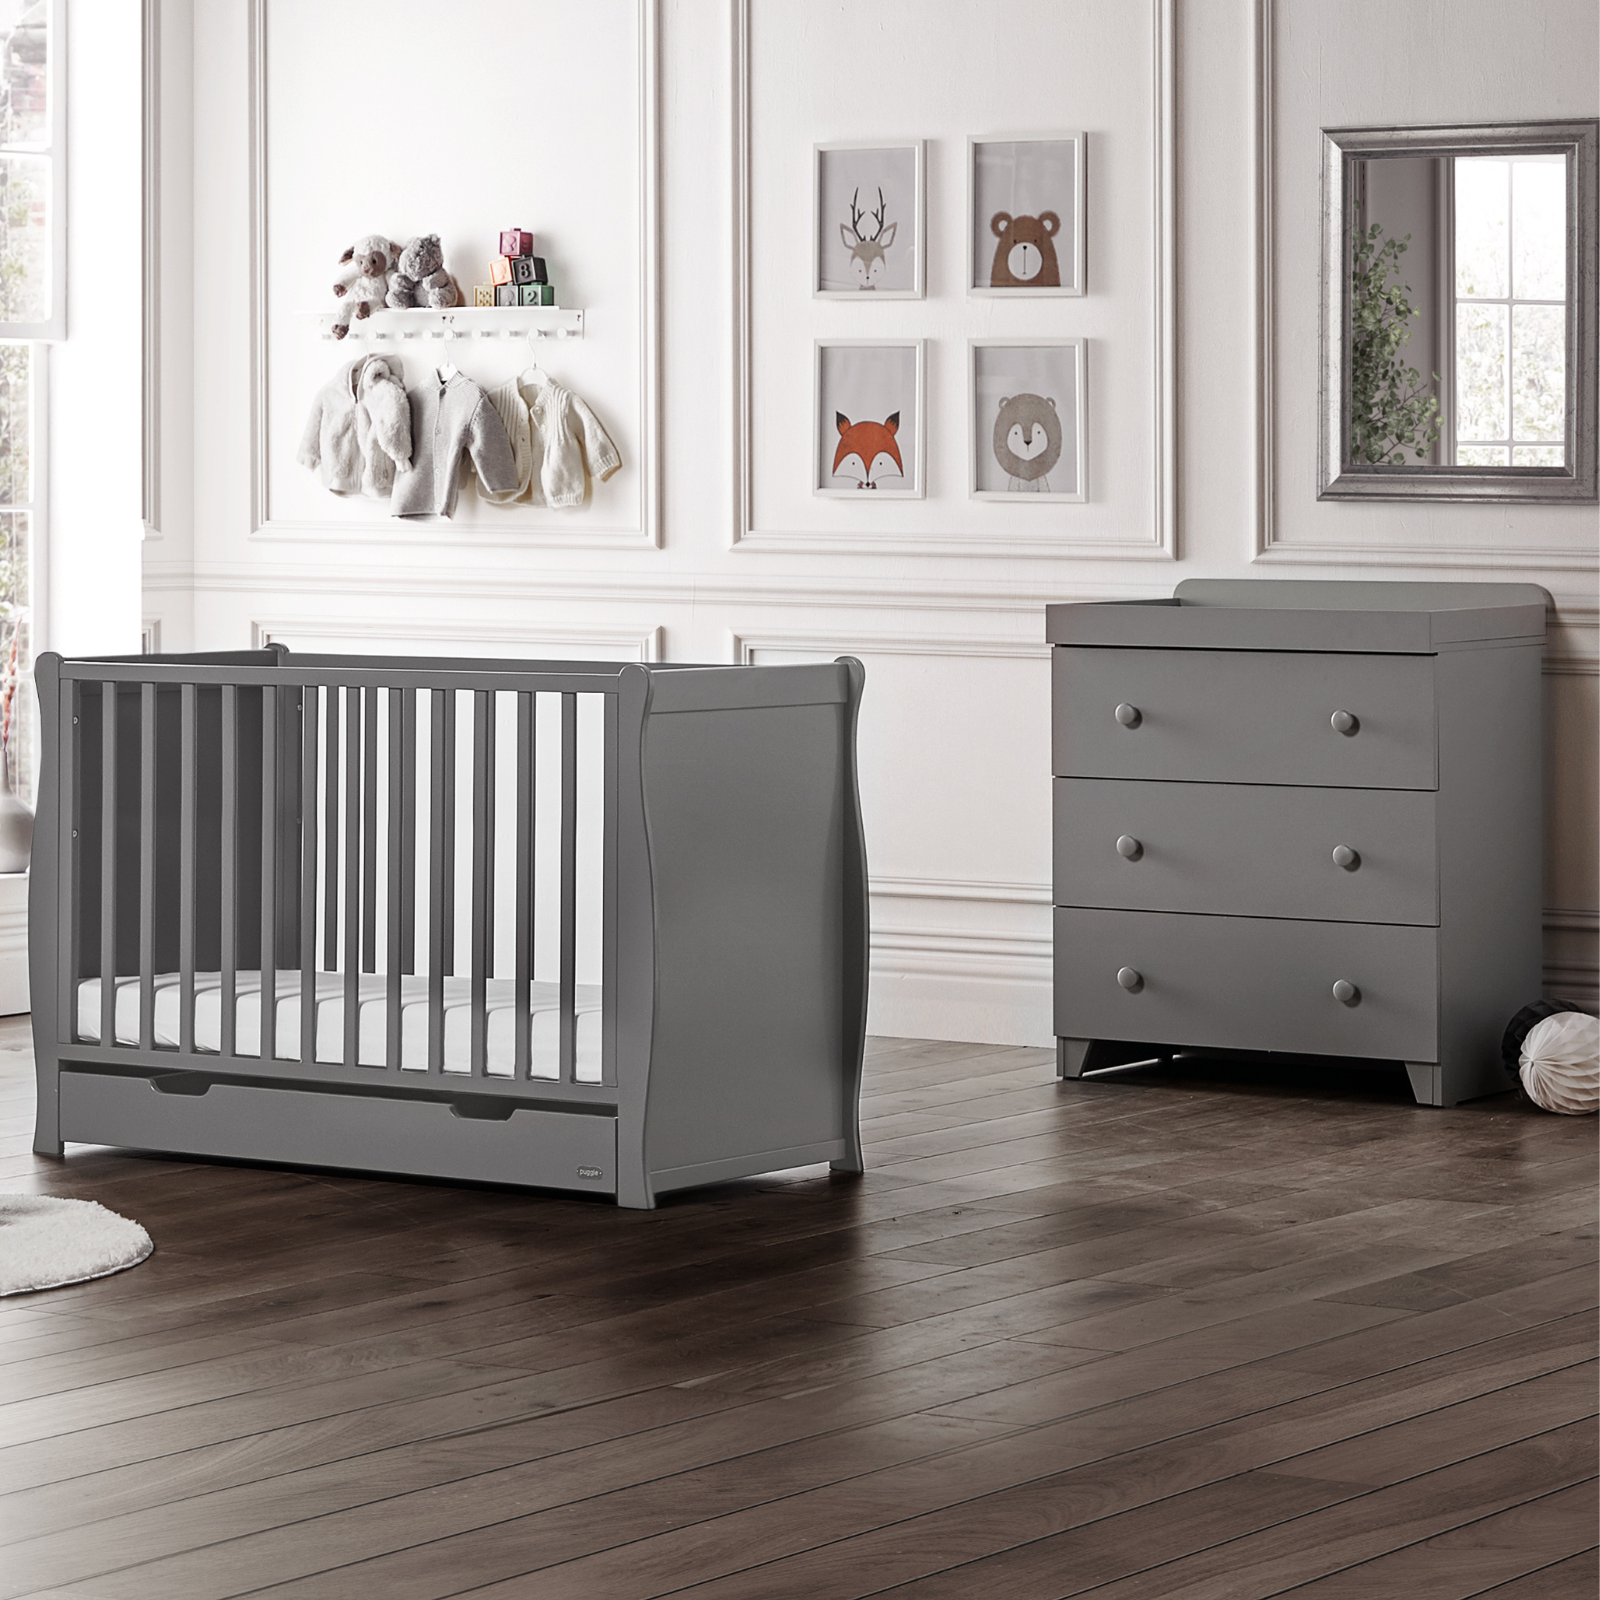 Puggle Chelford Sleigh Cot 5pc Nursery Furniture Set With Drawer & Maxi Air Cool Mattress - Grey